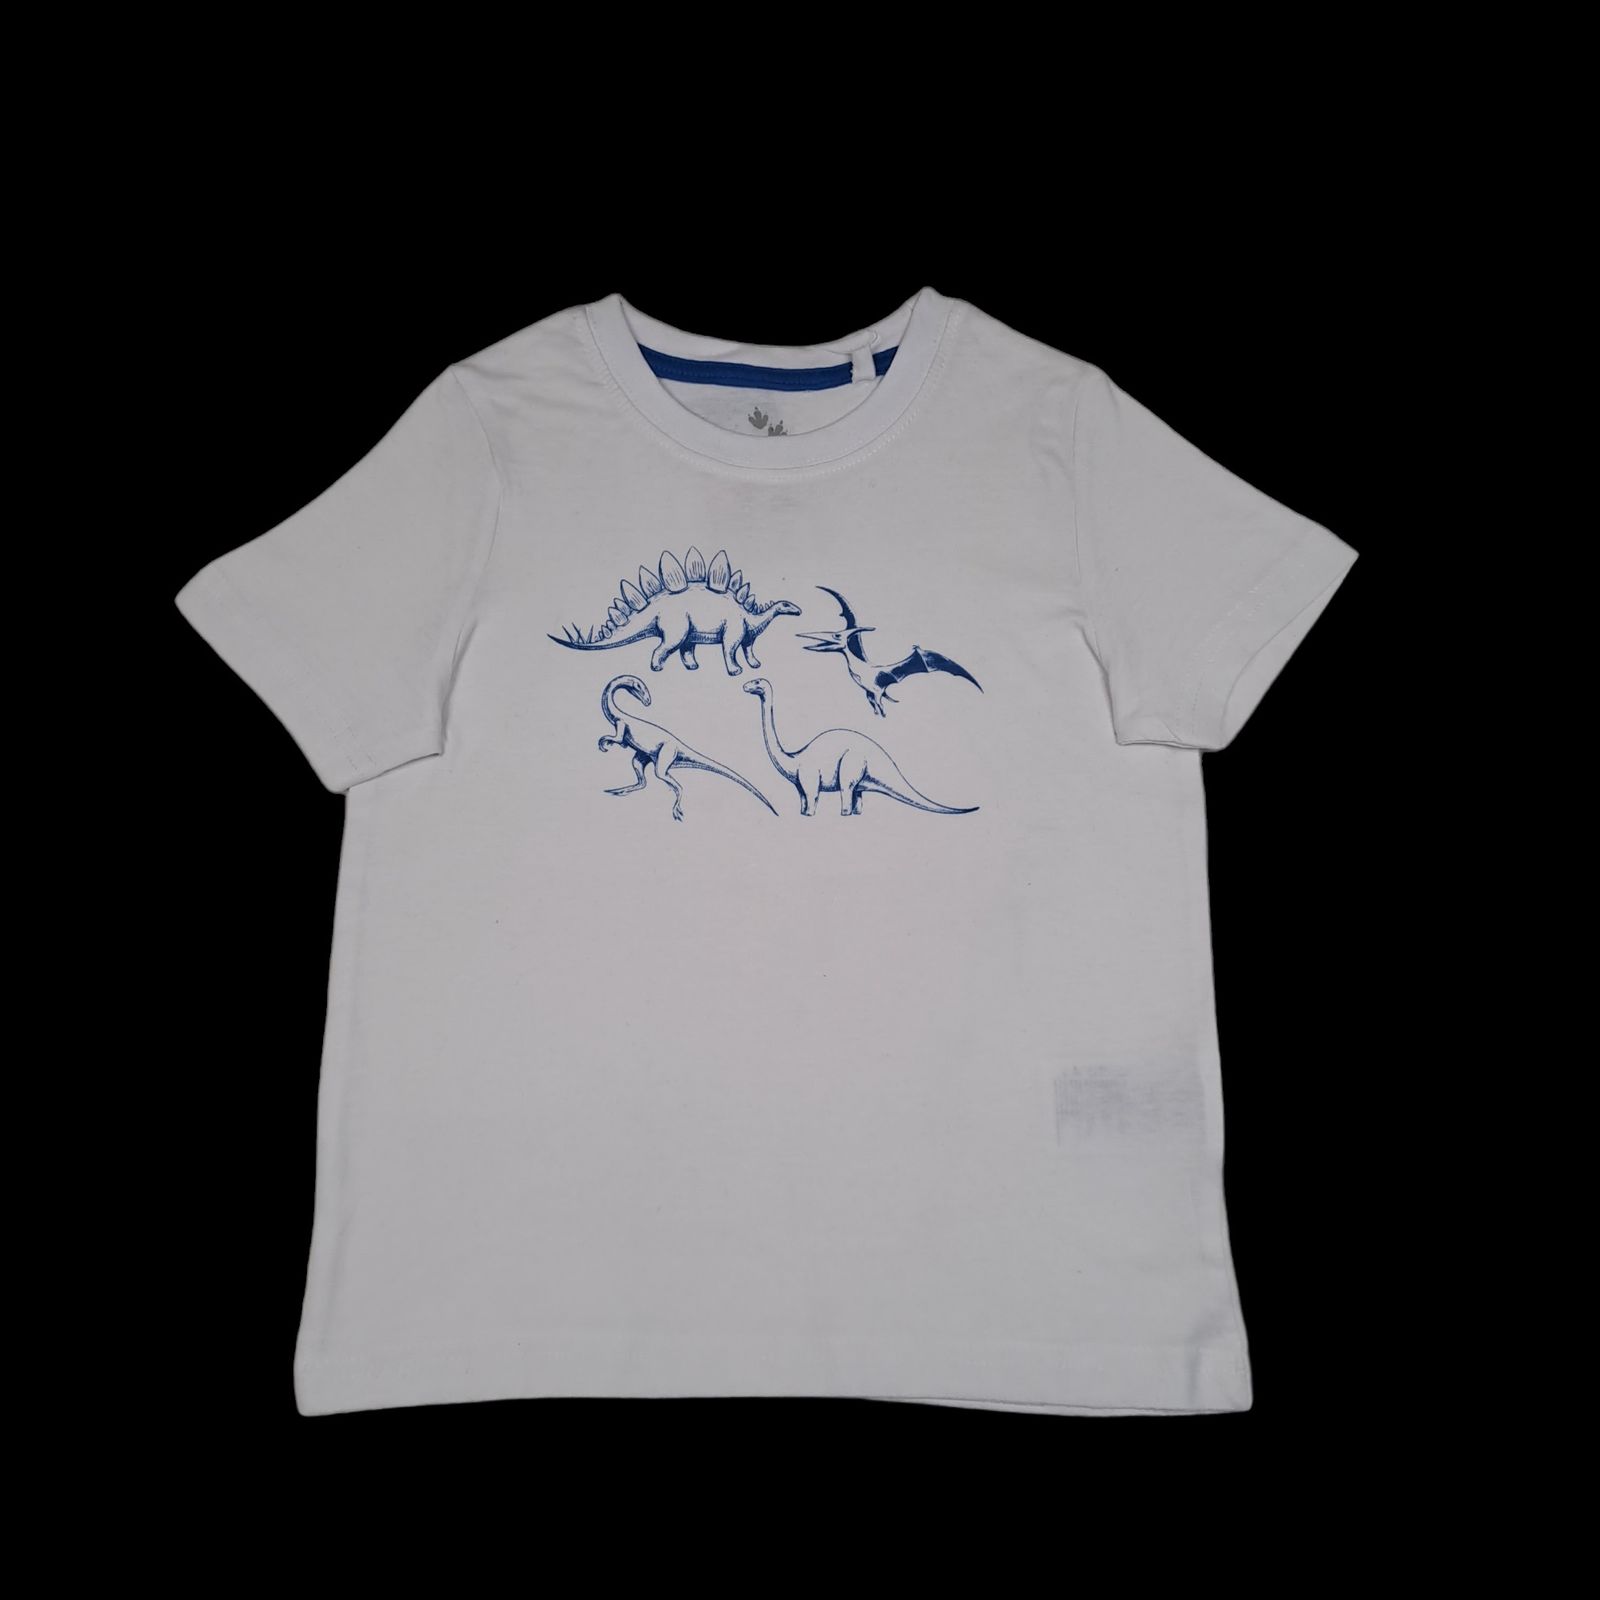 تی شرت آستین کوتاه پسرانه لوپیلو مدل دایناسور  -  - 4